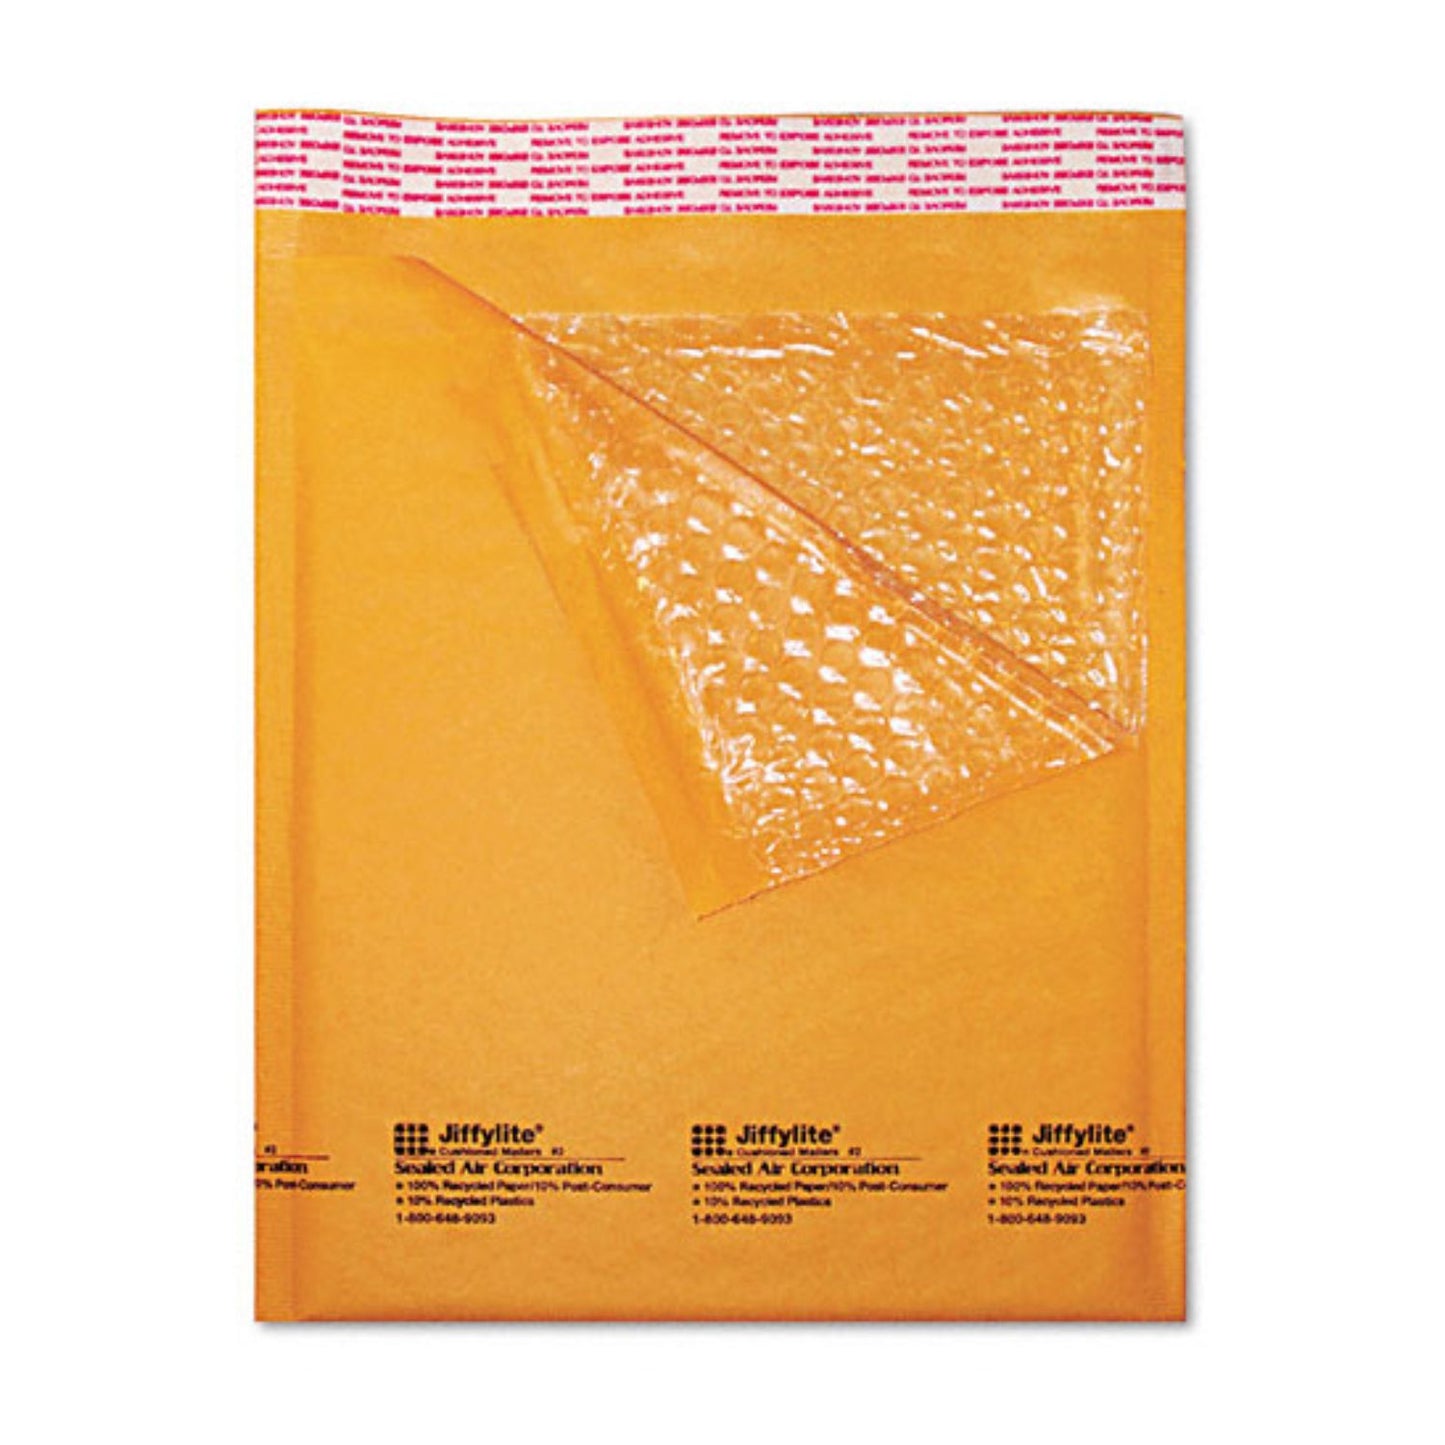 Stamp Mailing Envelopes - Rubber Stamp Materials